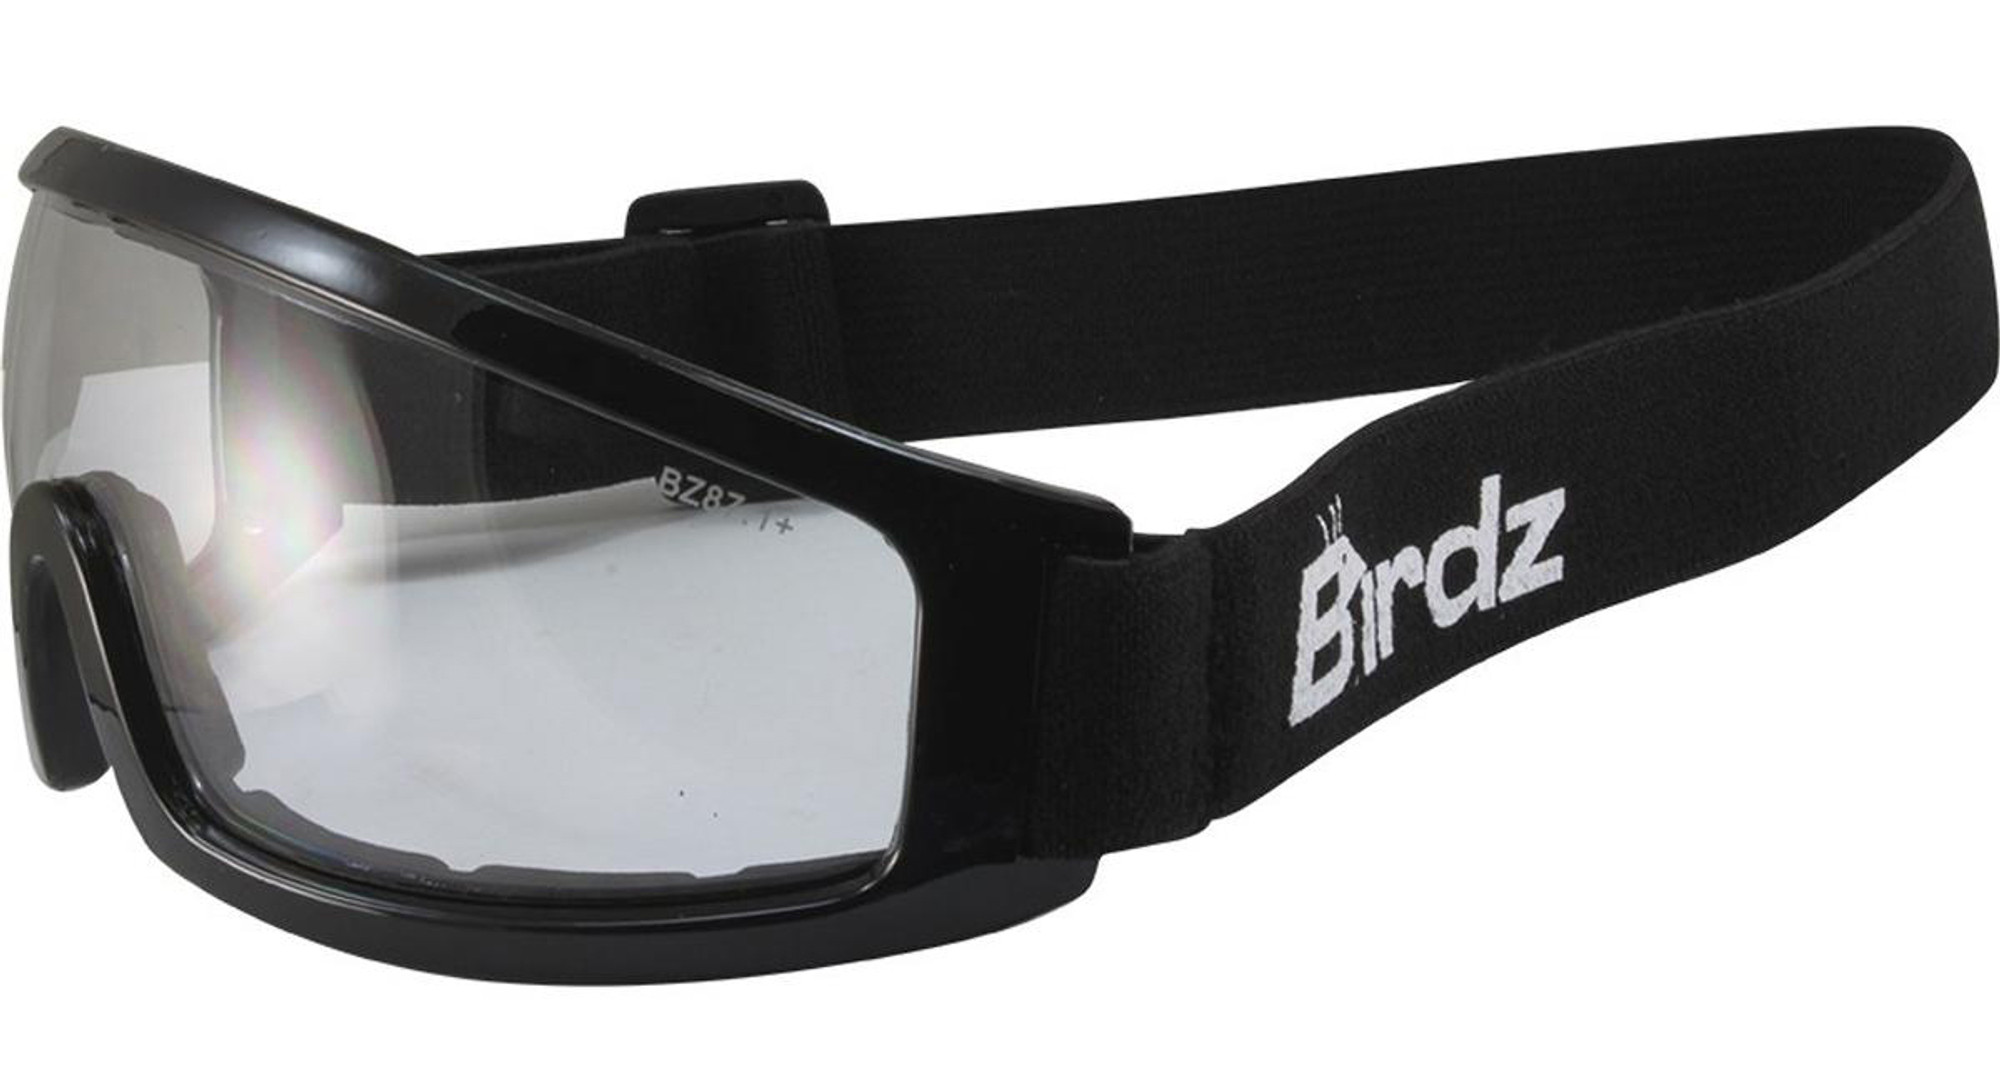 Birdz Eyewear Robin Low Profile ANSI Z87.1 Goggles